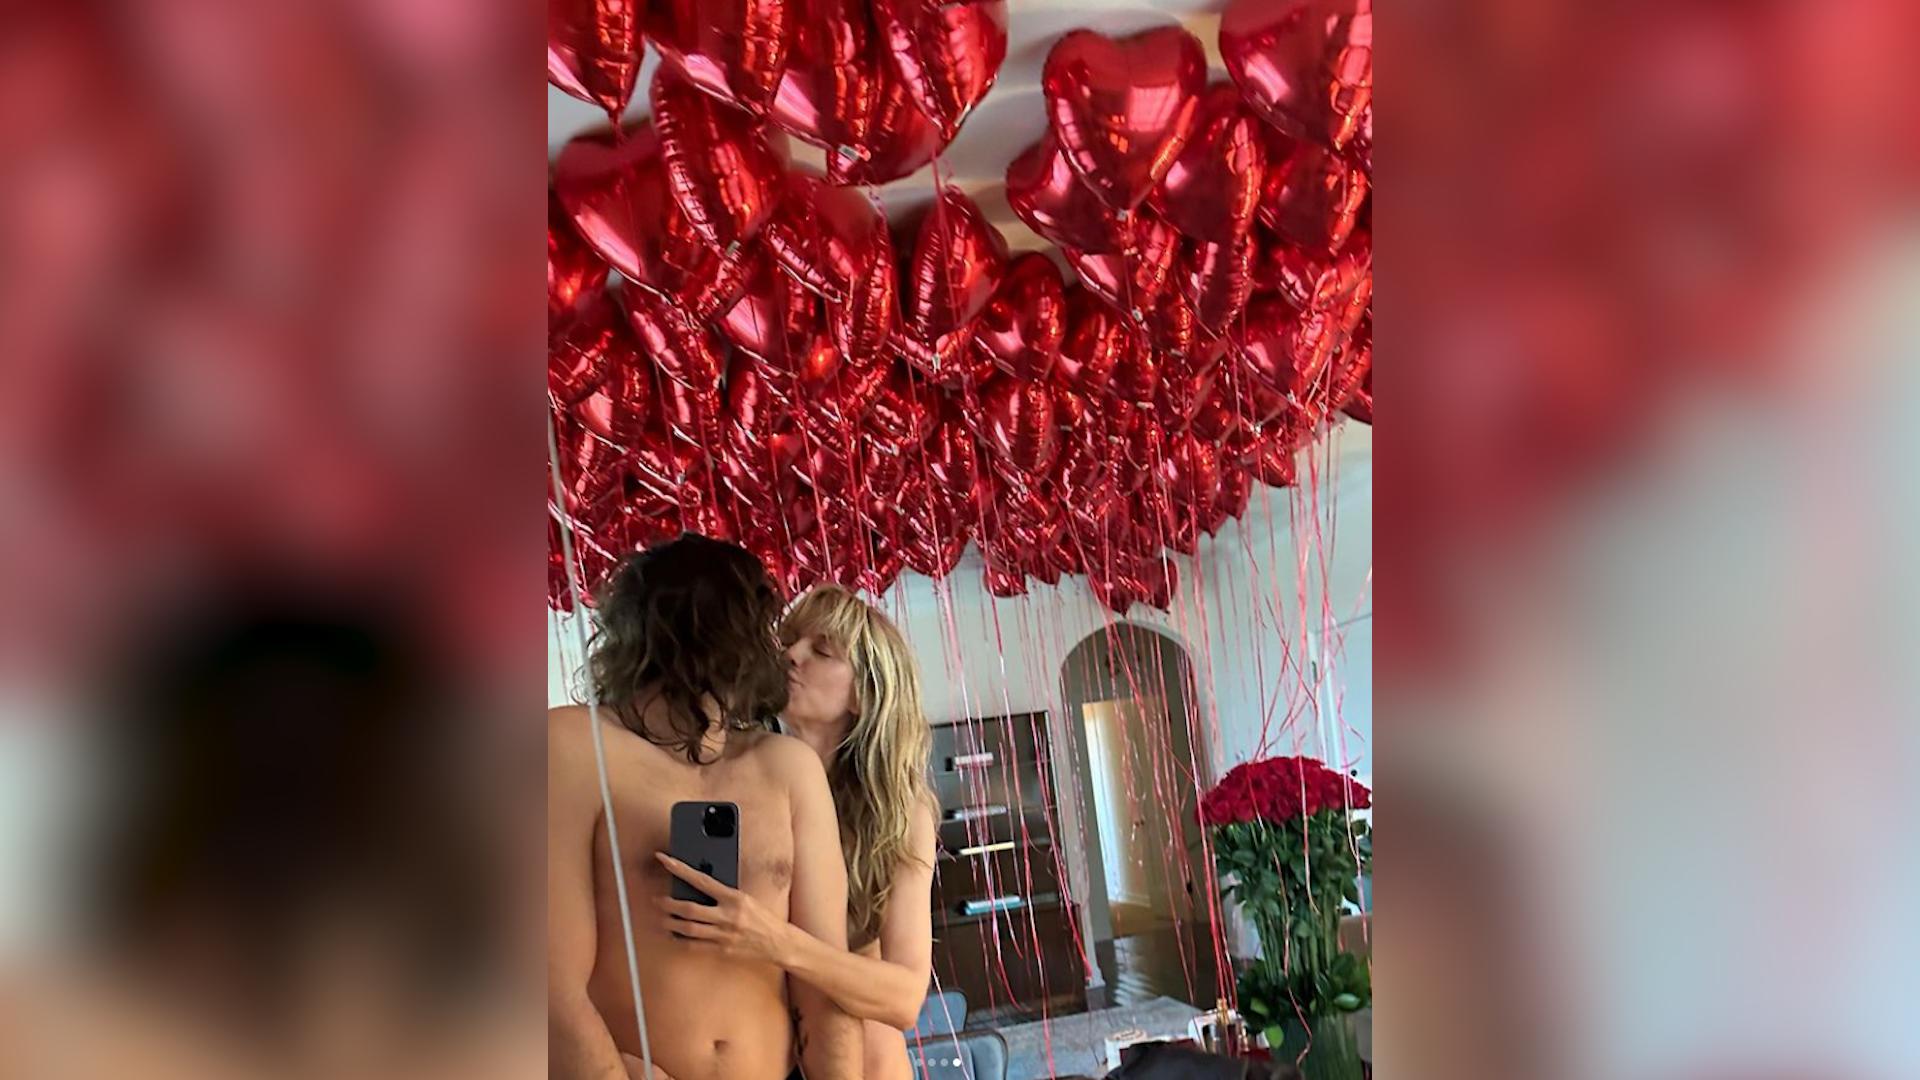 Heidi Klum y Tom Kaulitz aparecen desnudos en la red, no por primera vez